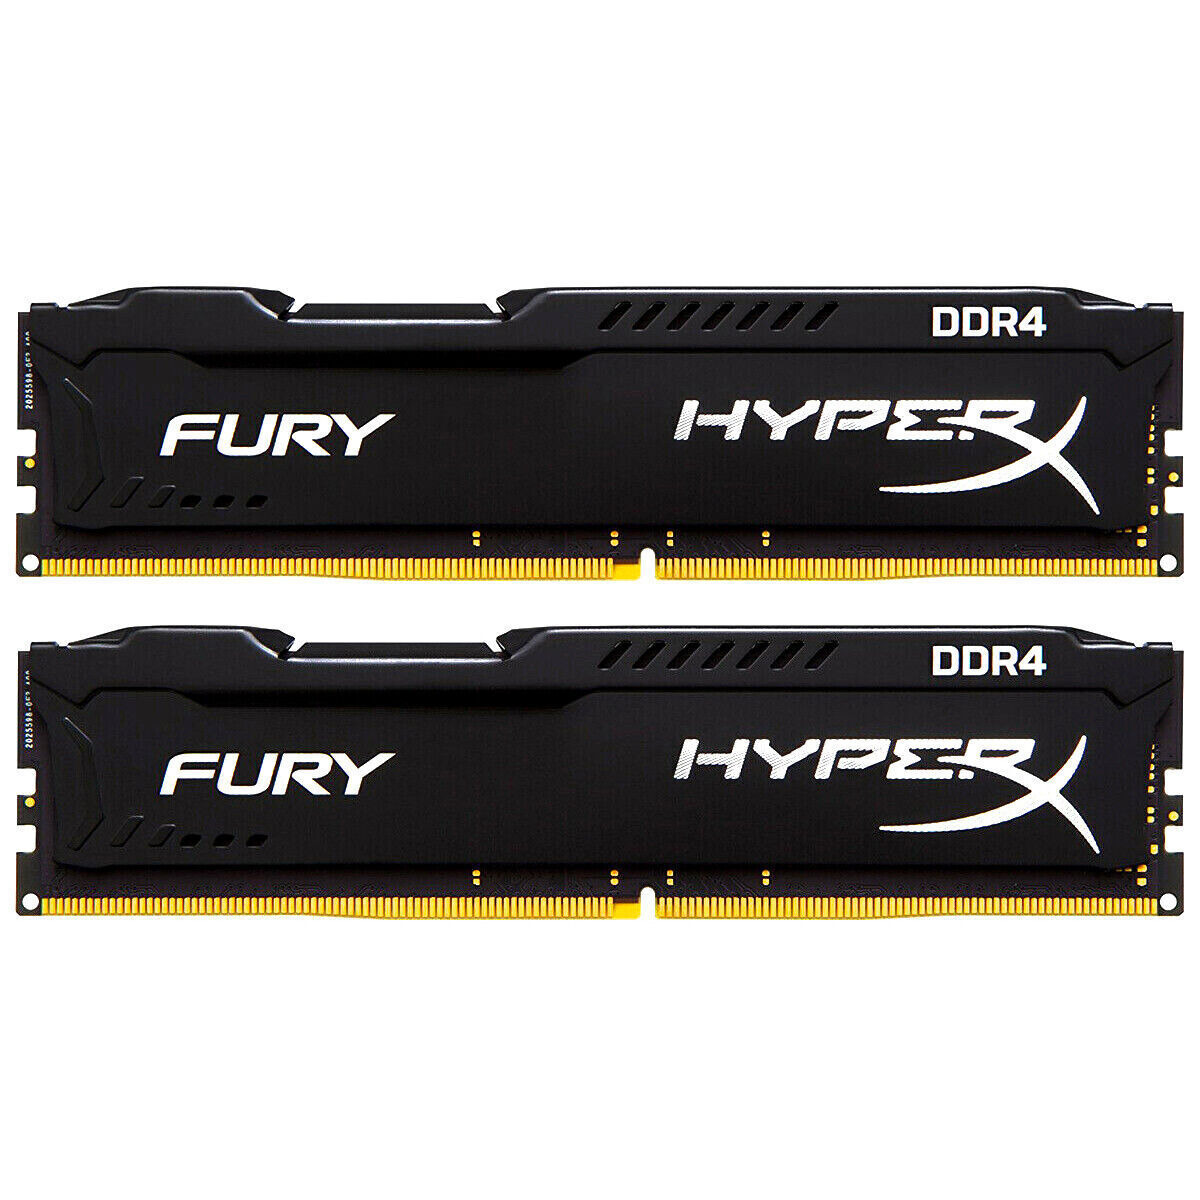 HyperX FURY DDR4 8GB 3200MHz PC4-25600 288PIN 2x8GB Desktop Memory DIMM